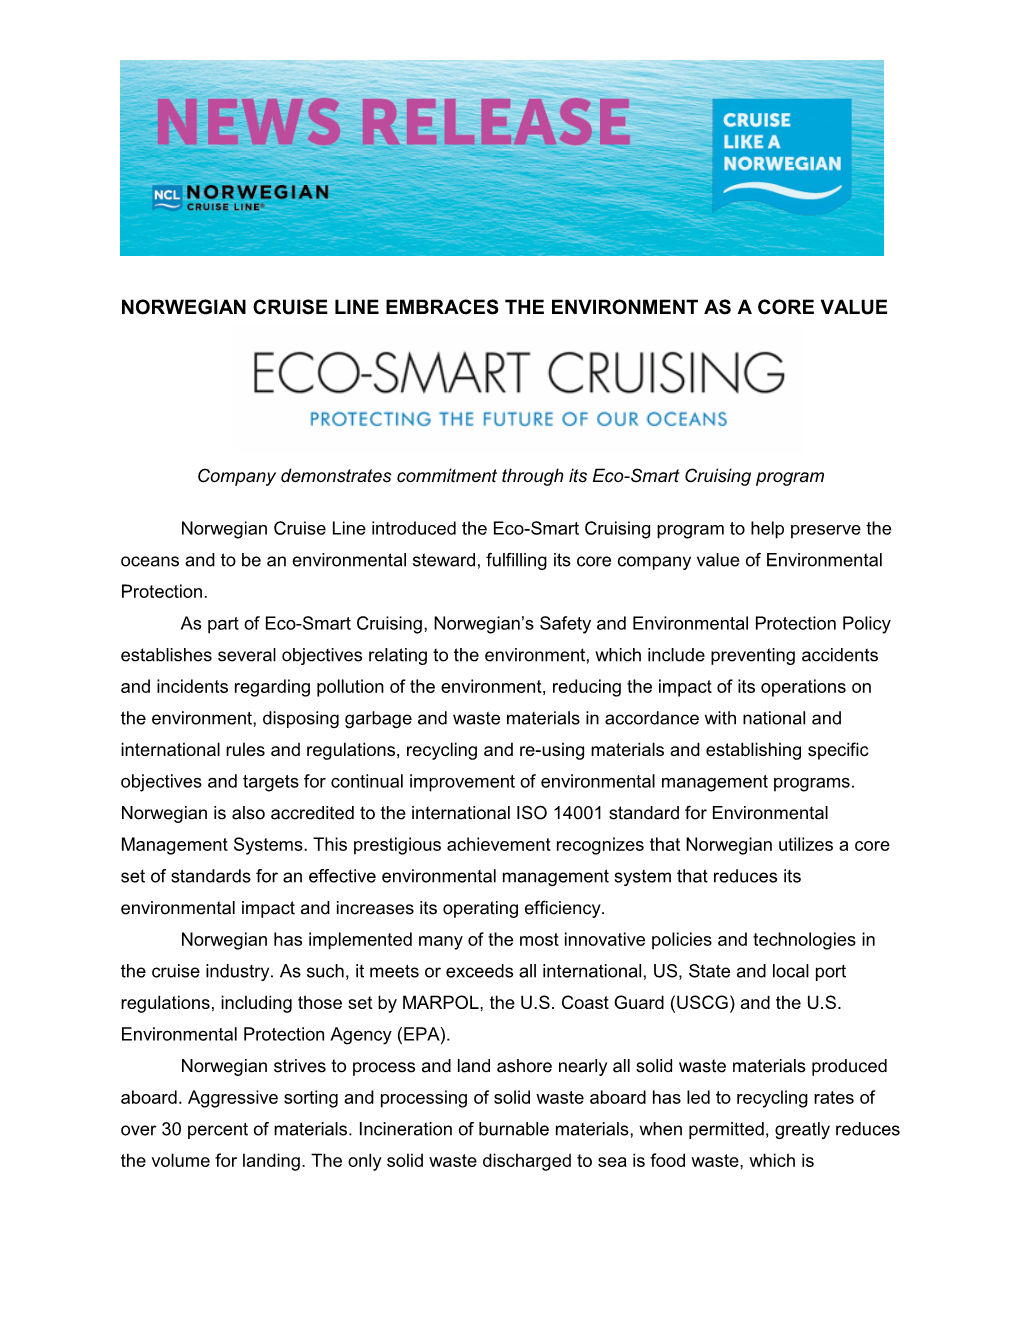 Norwegian Cruise Line Introduced the Eco-Smart Cruising Program